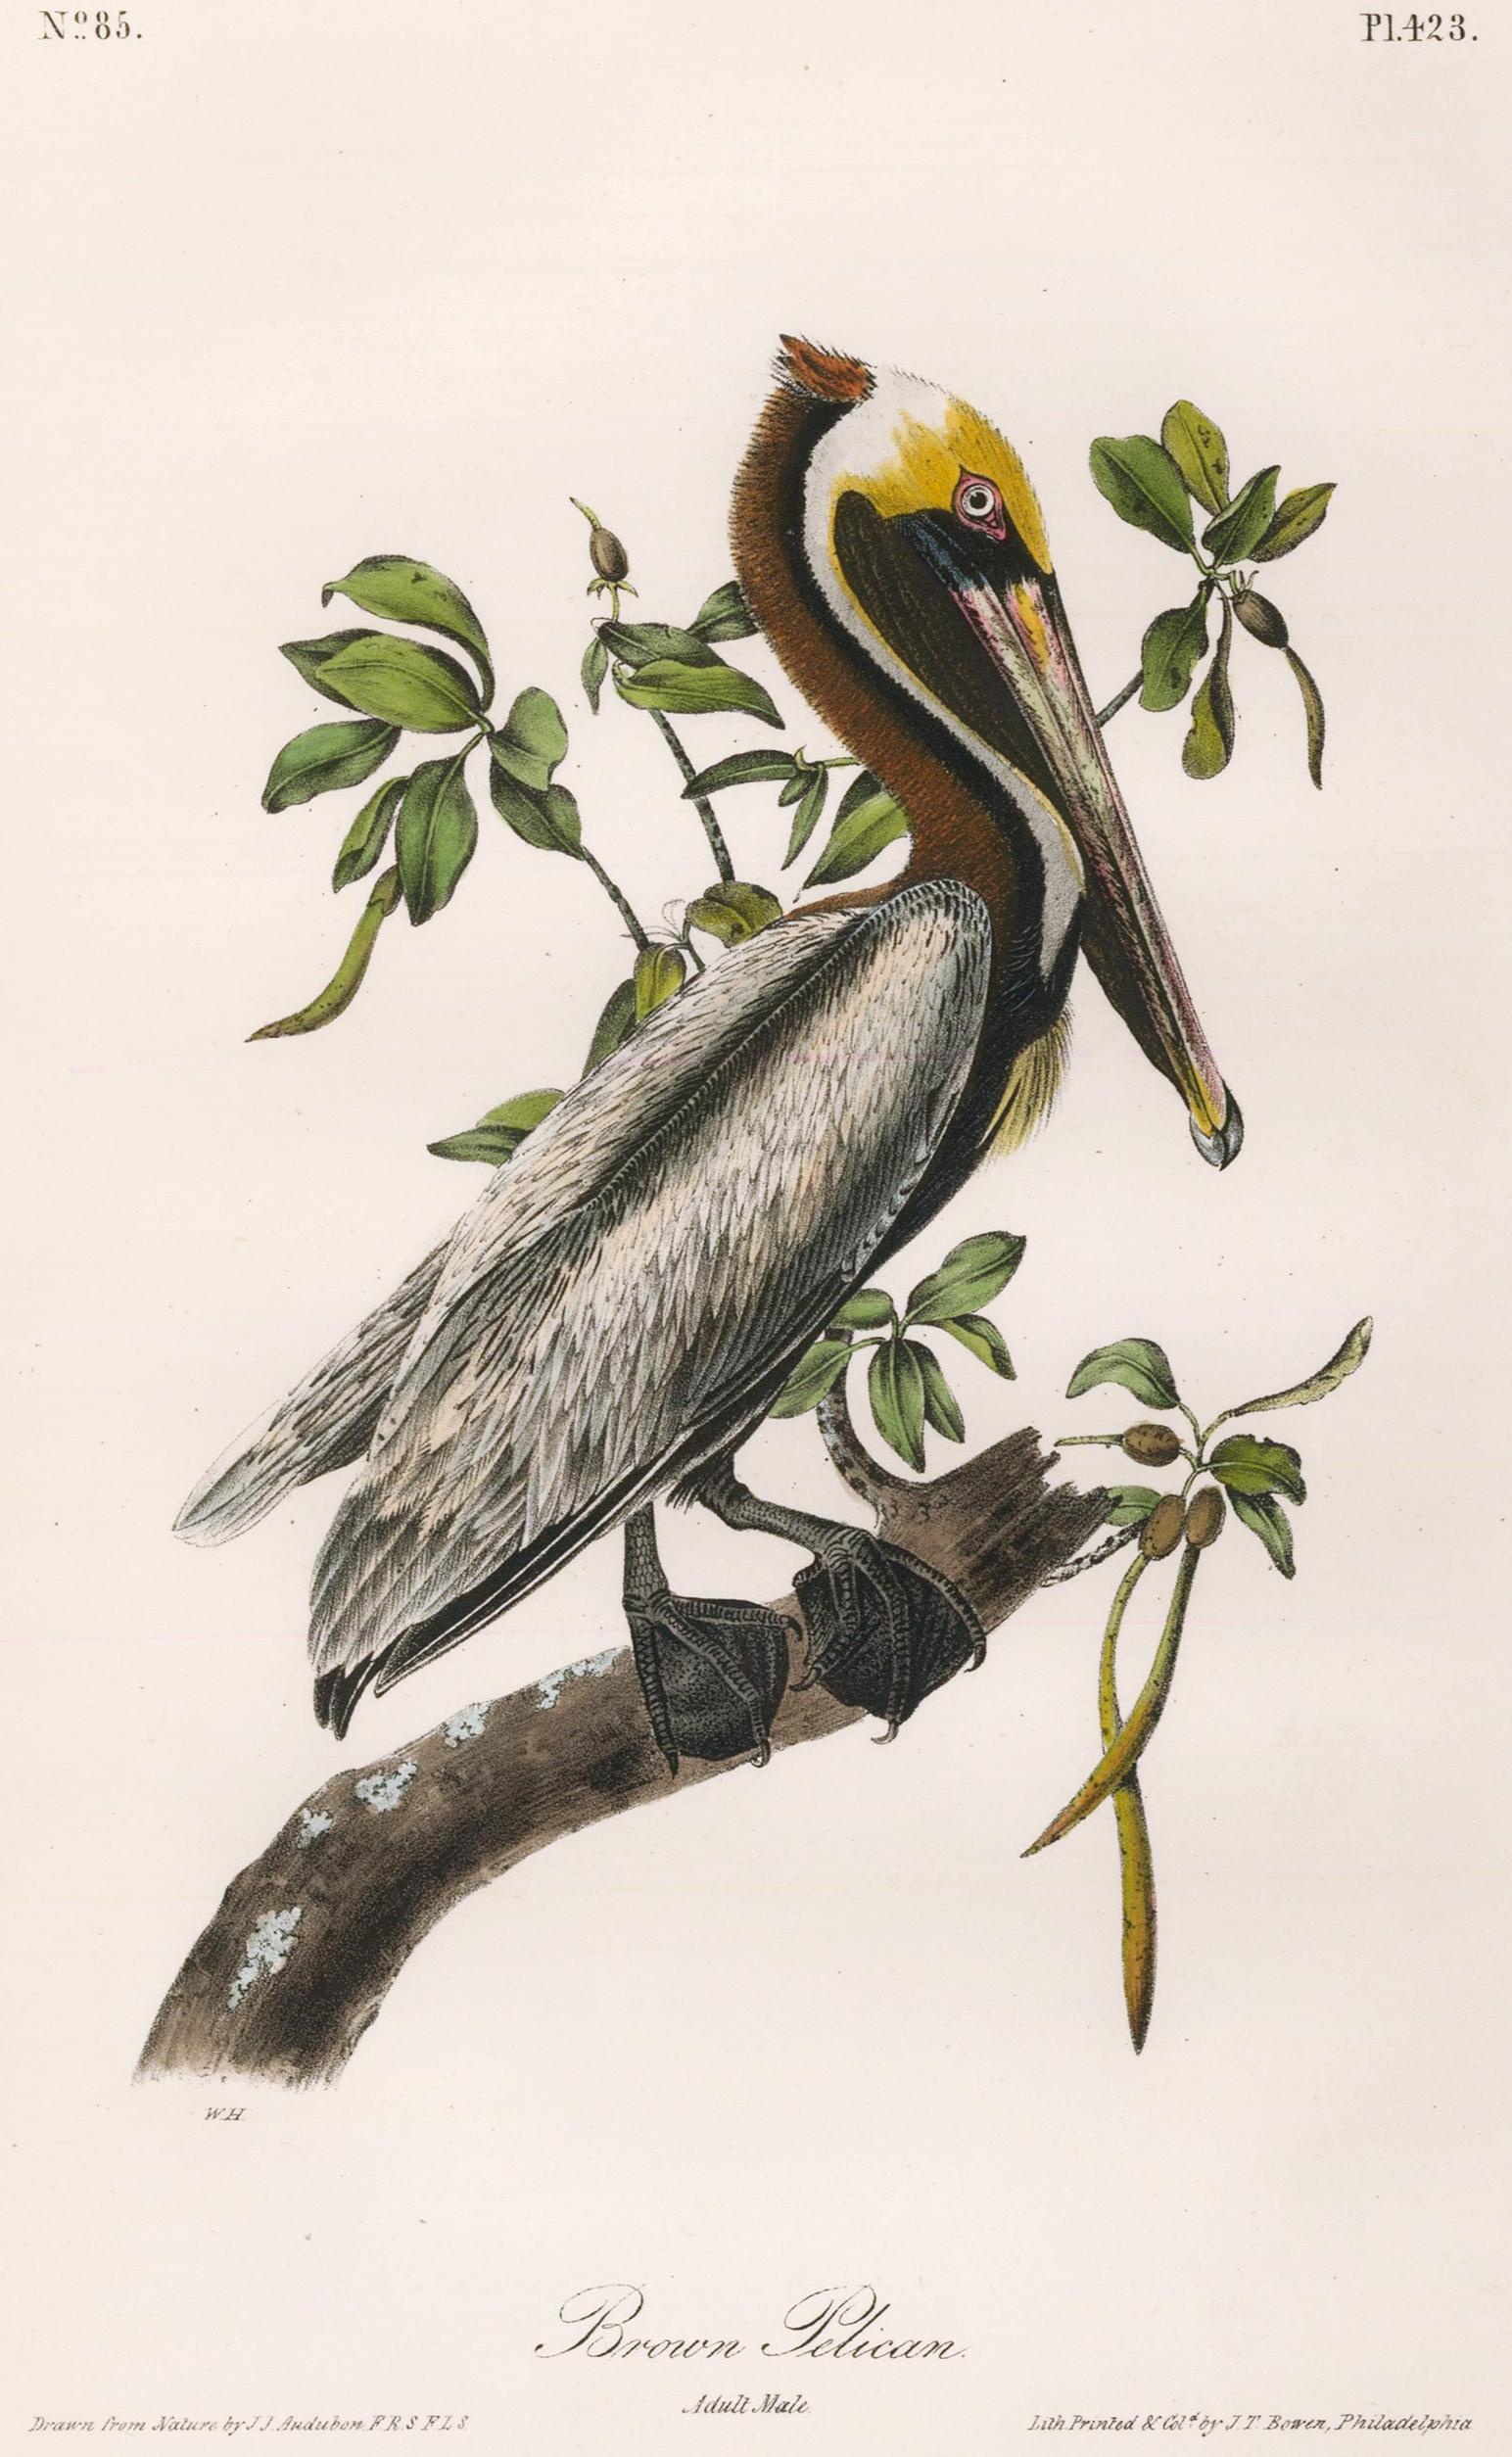 John James Audubon Animal Print - Brown Pelican.